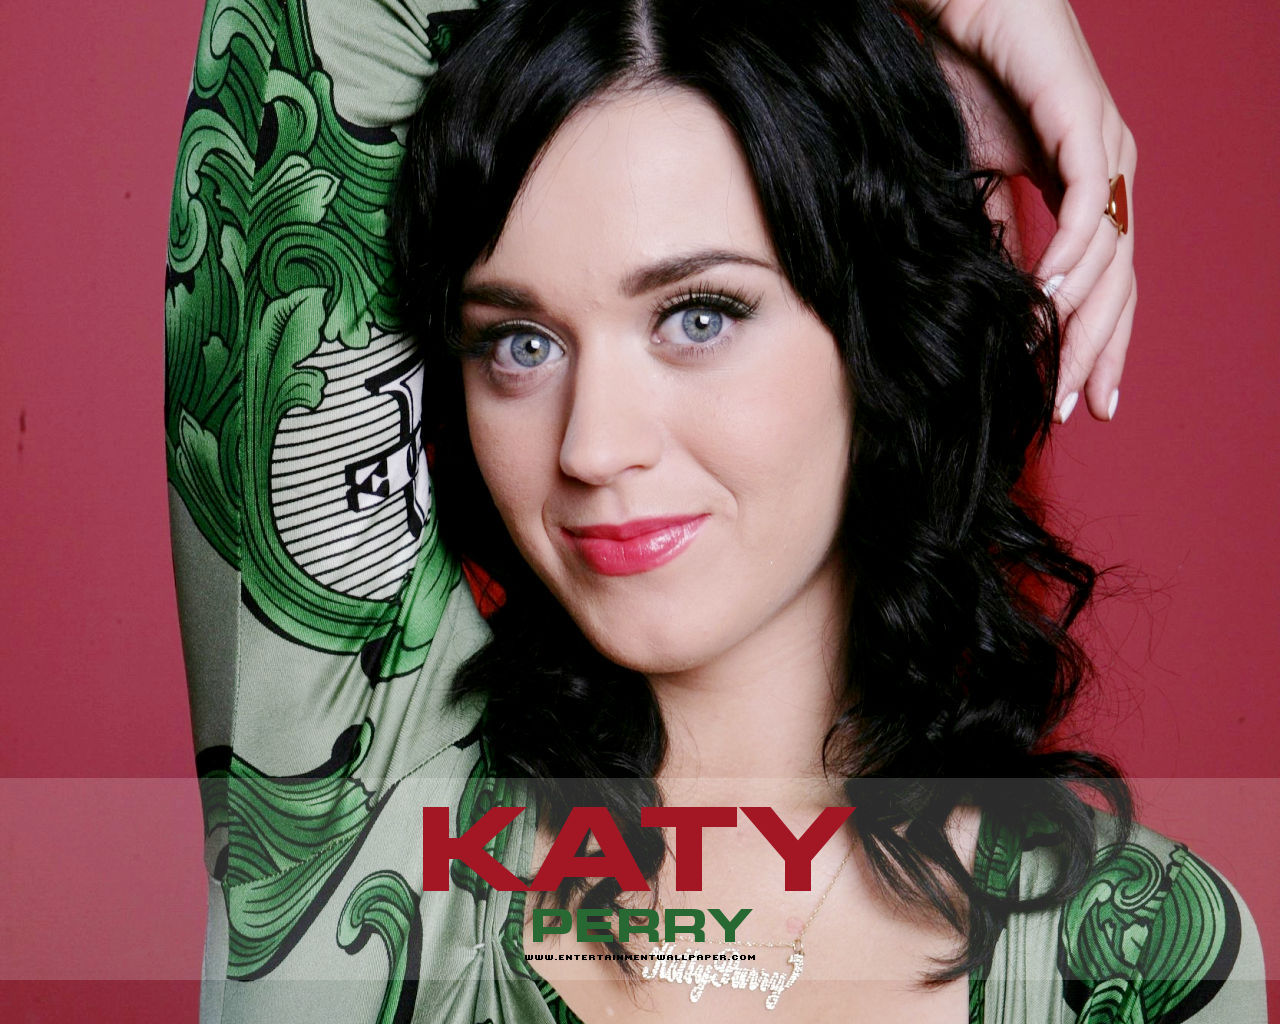 Katy perry06